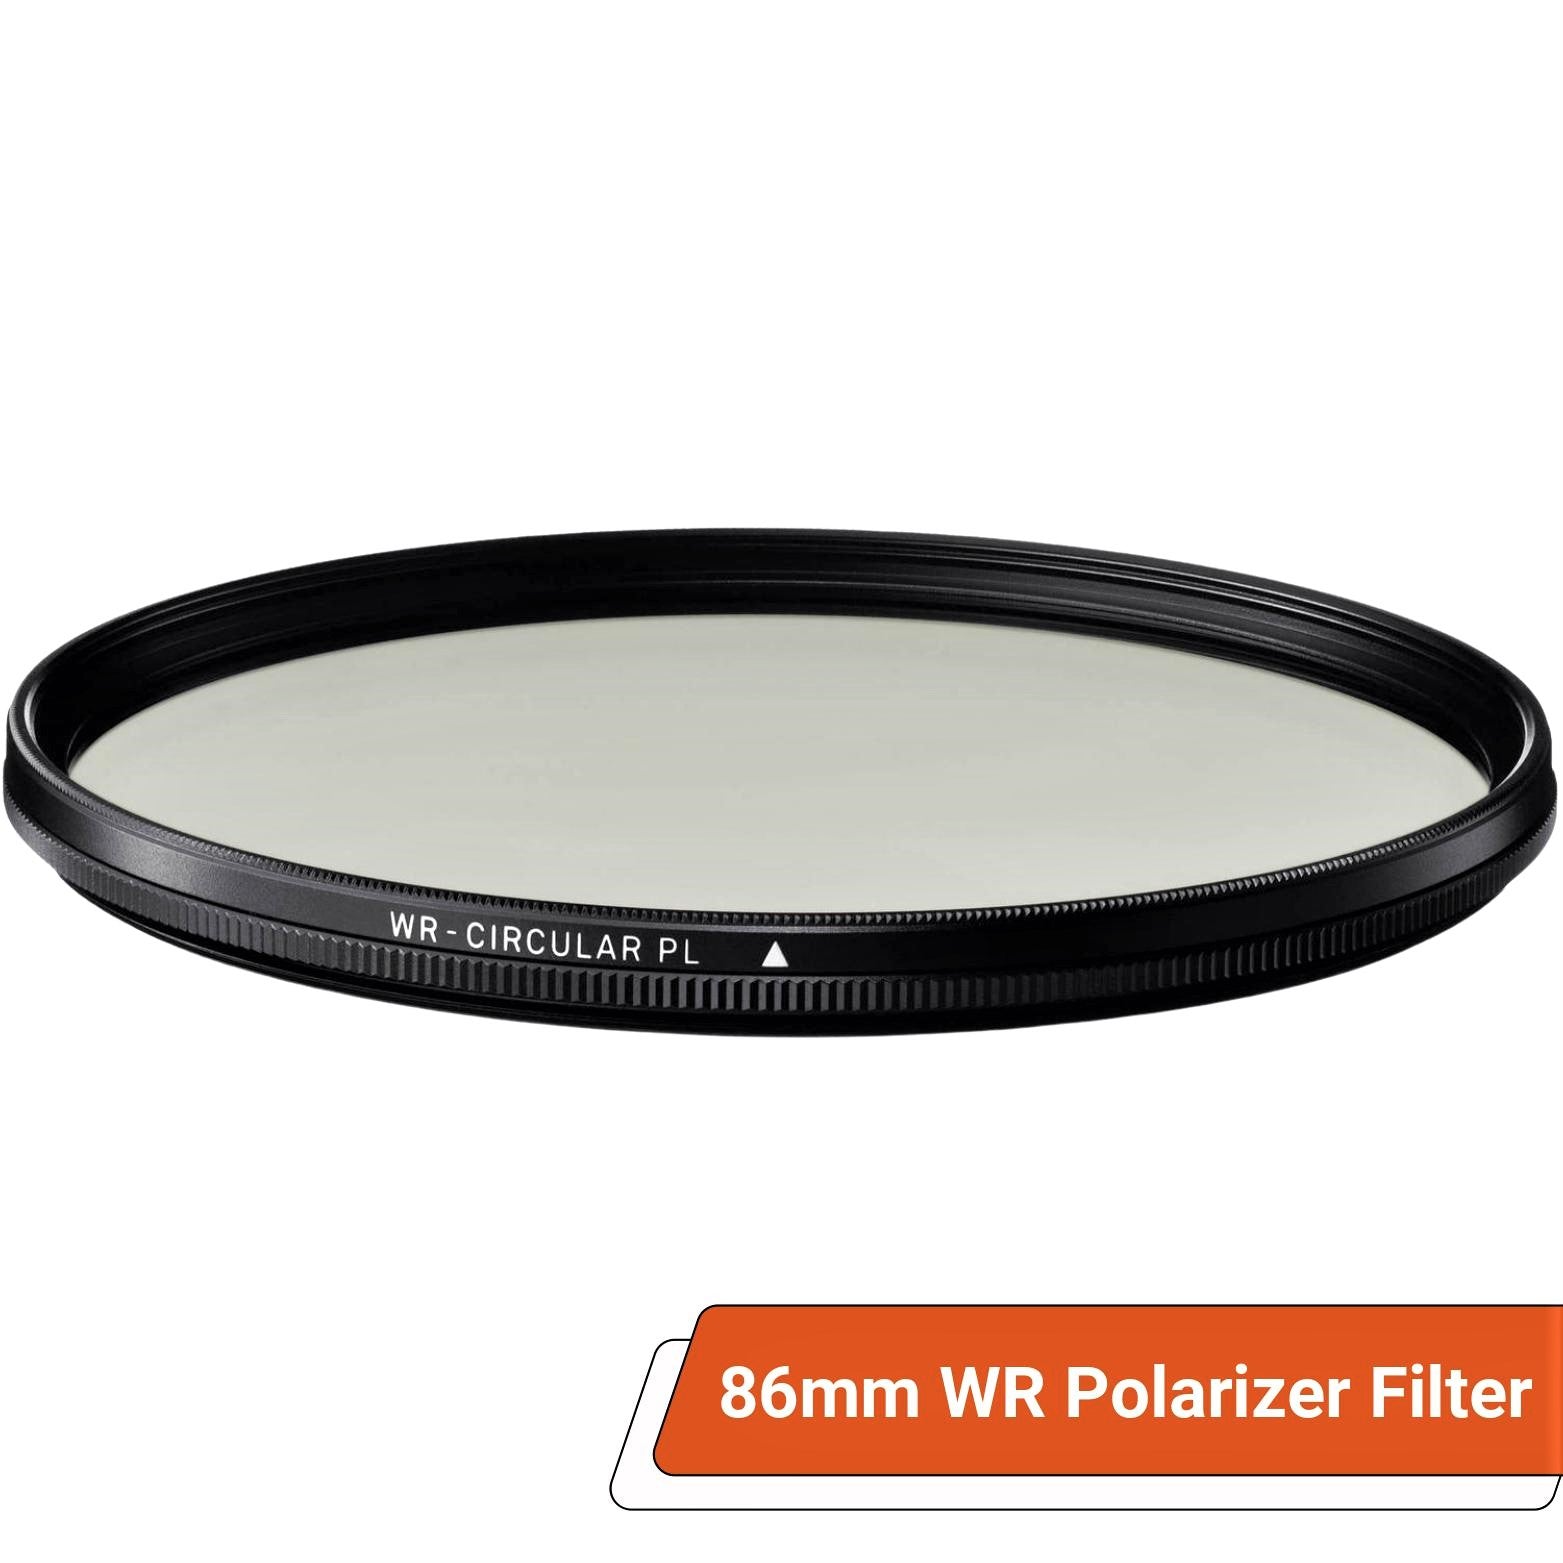 Sigma 86mm WR (Water Repellent) Circular Polarizer Filter